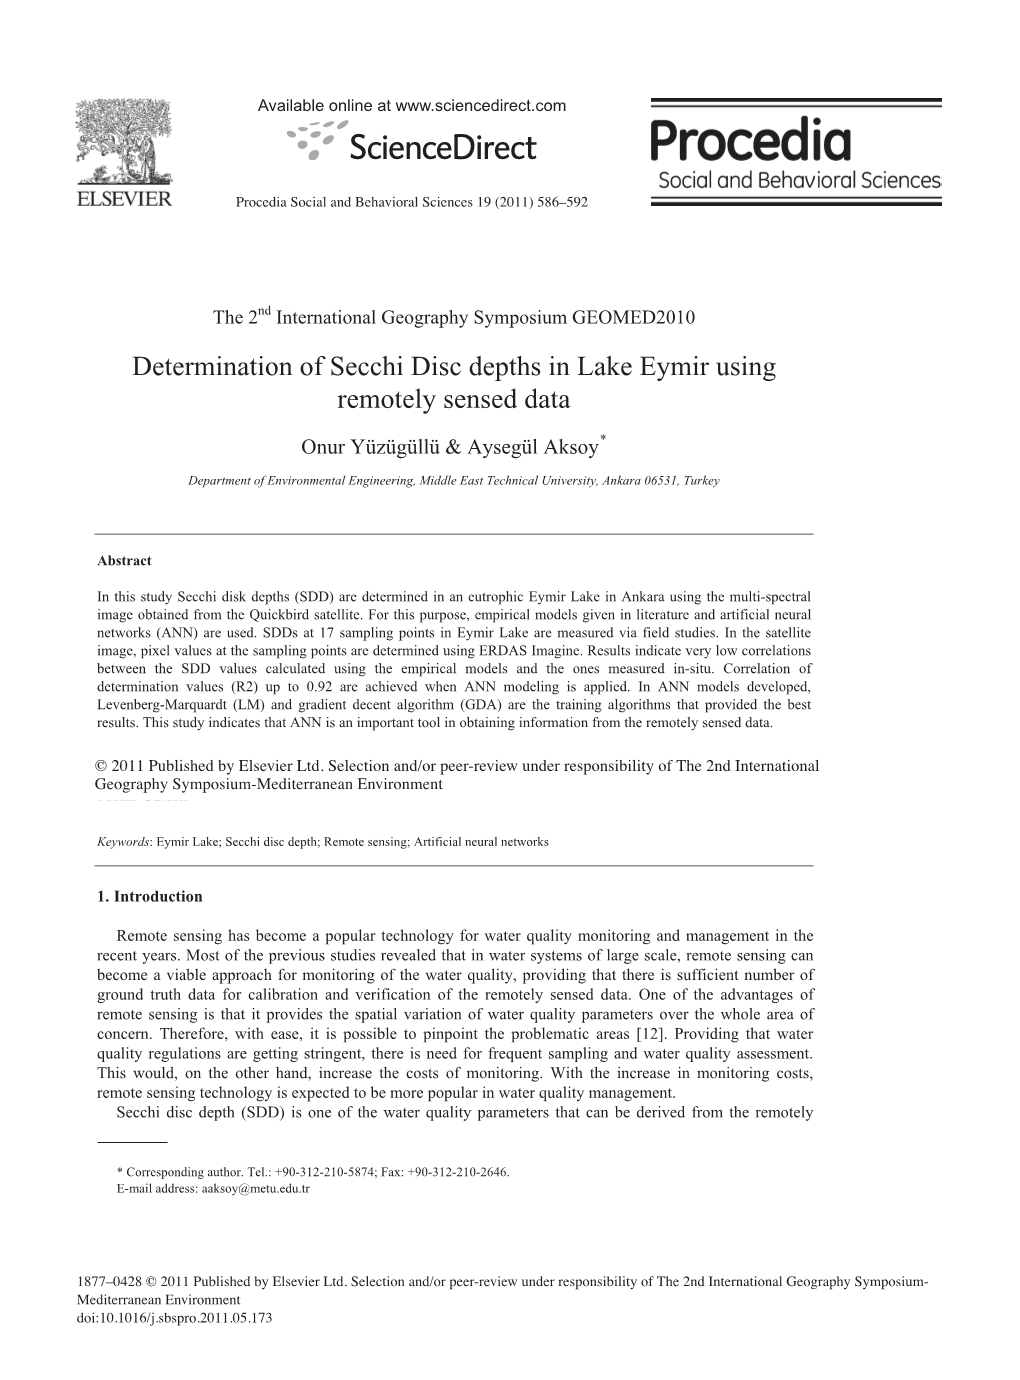 Determination of Secchi Disc Depths in Lake Eymir Using Remotely Sensed Data